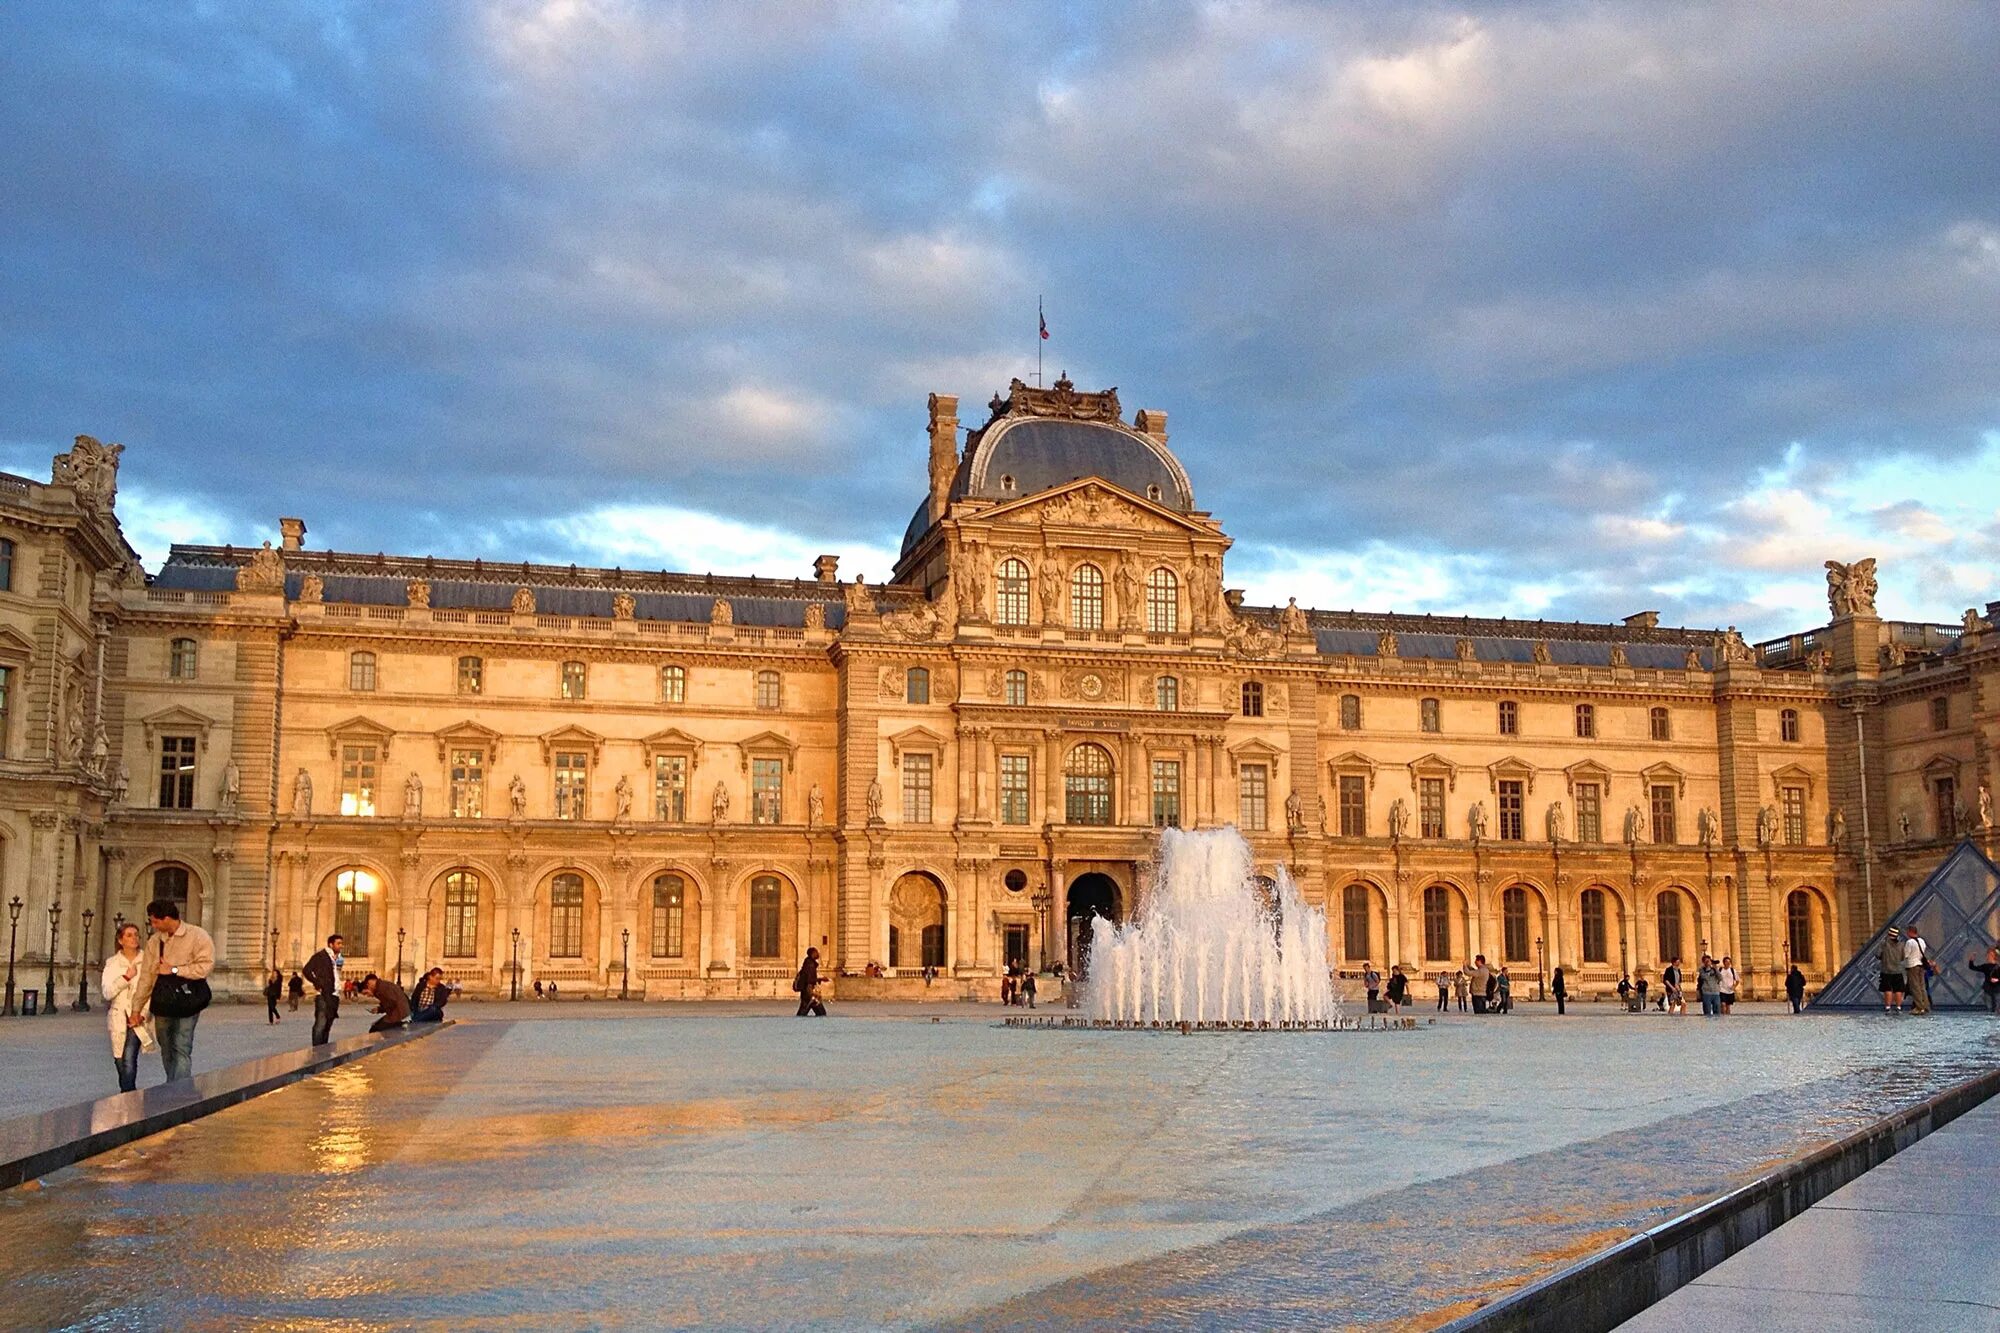 Musee louvre. Королевский дворец Лувр. Лувр музей. Луврский дворец в Париже. Музей Лувр в Париже здание.